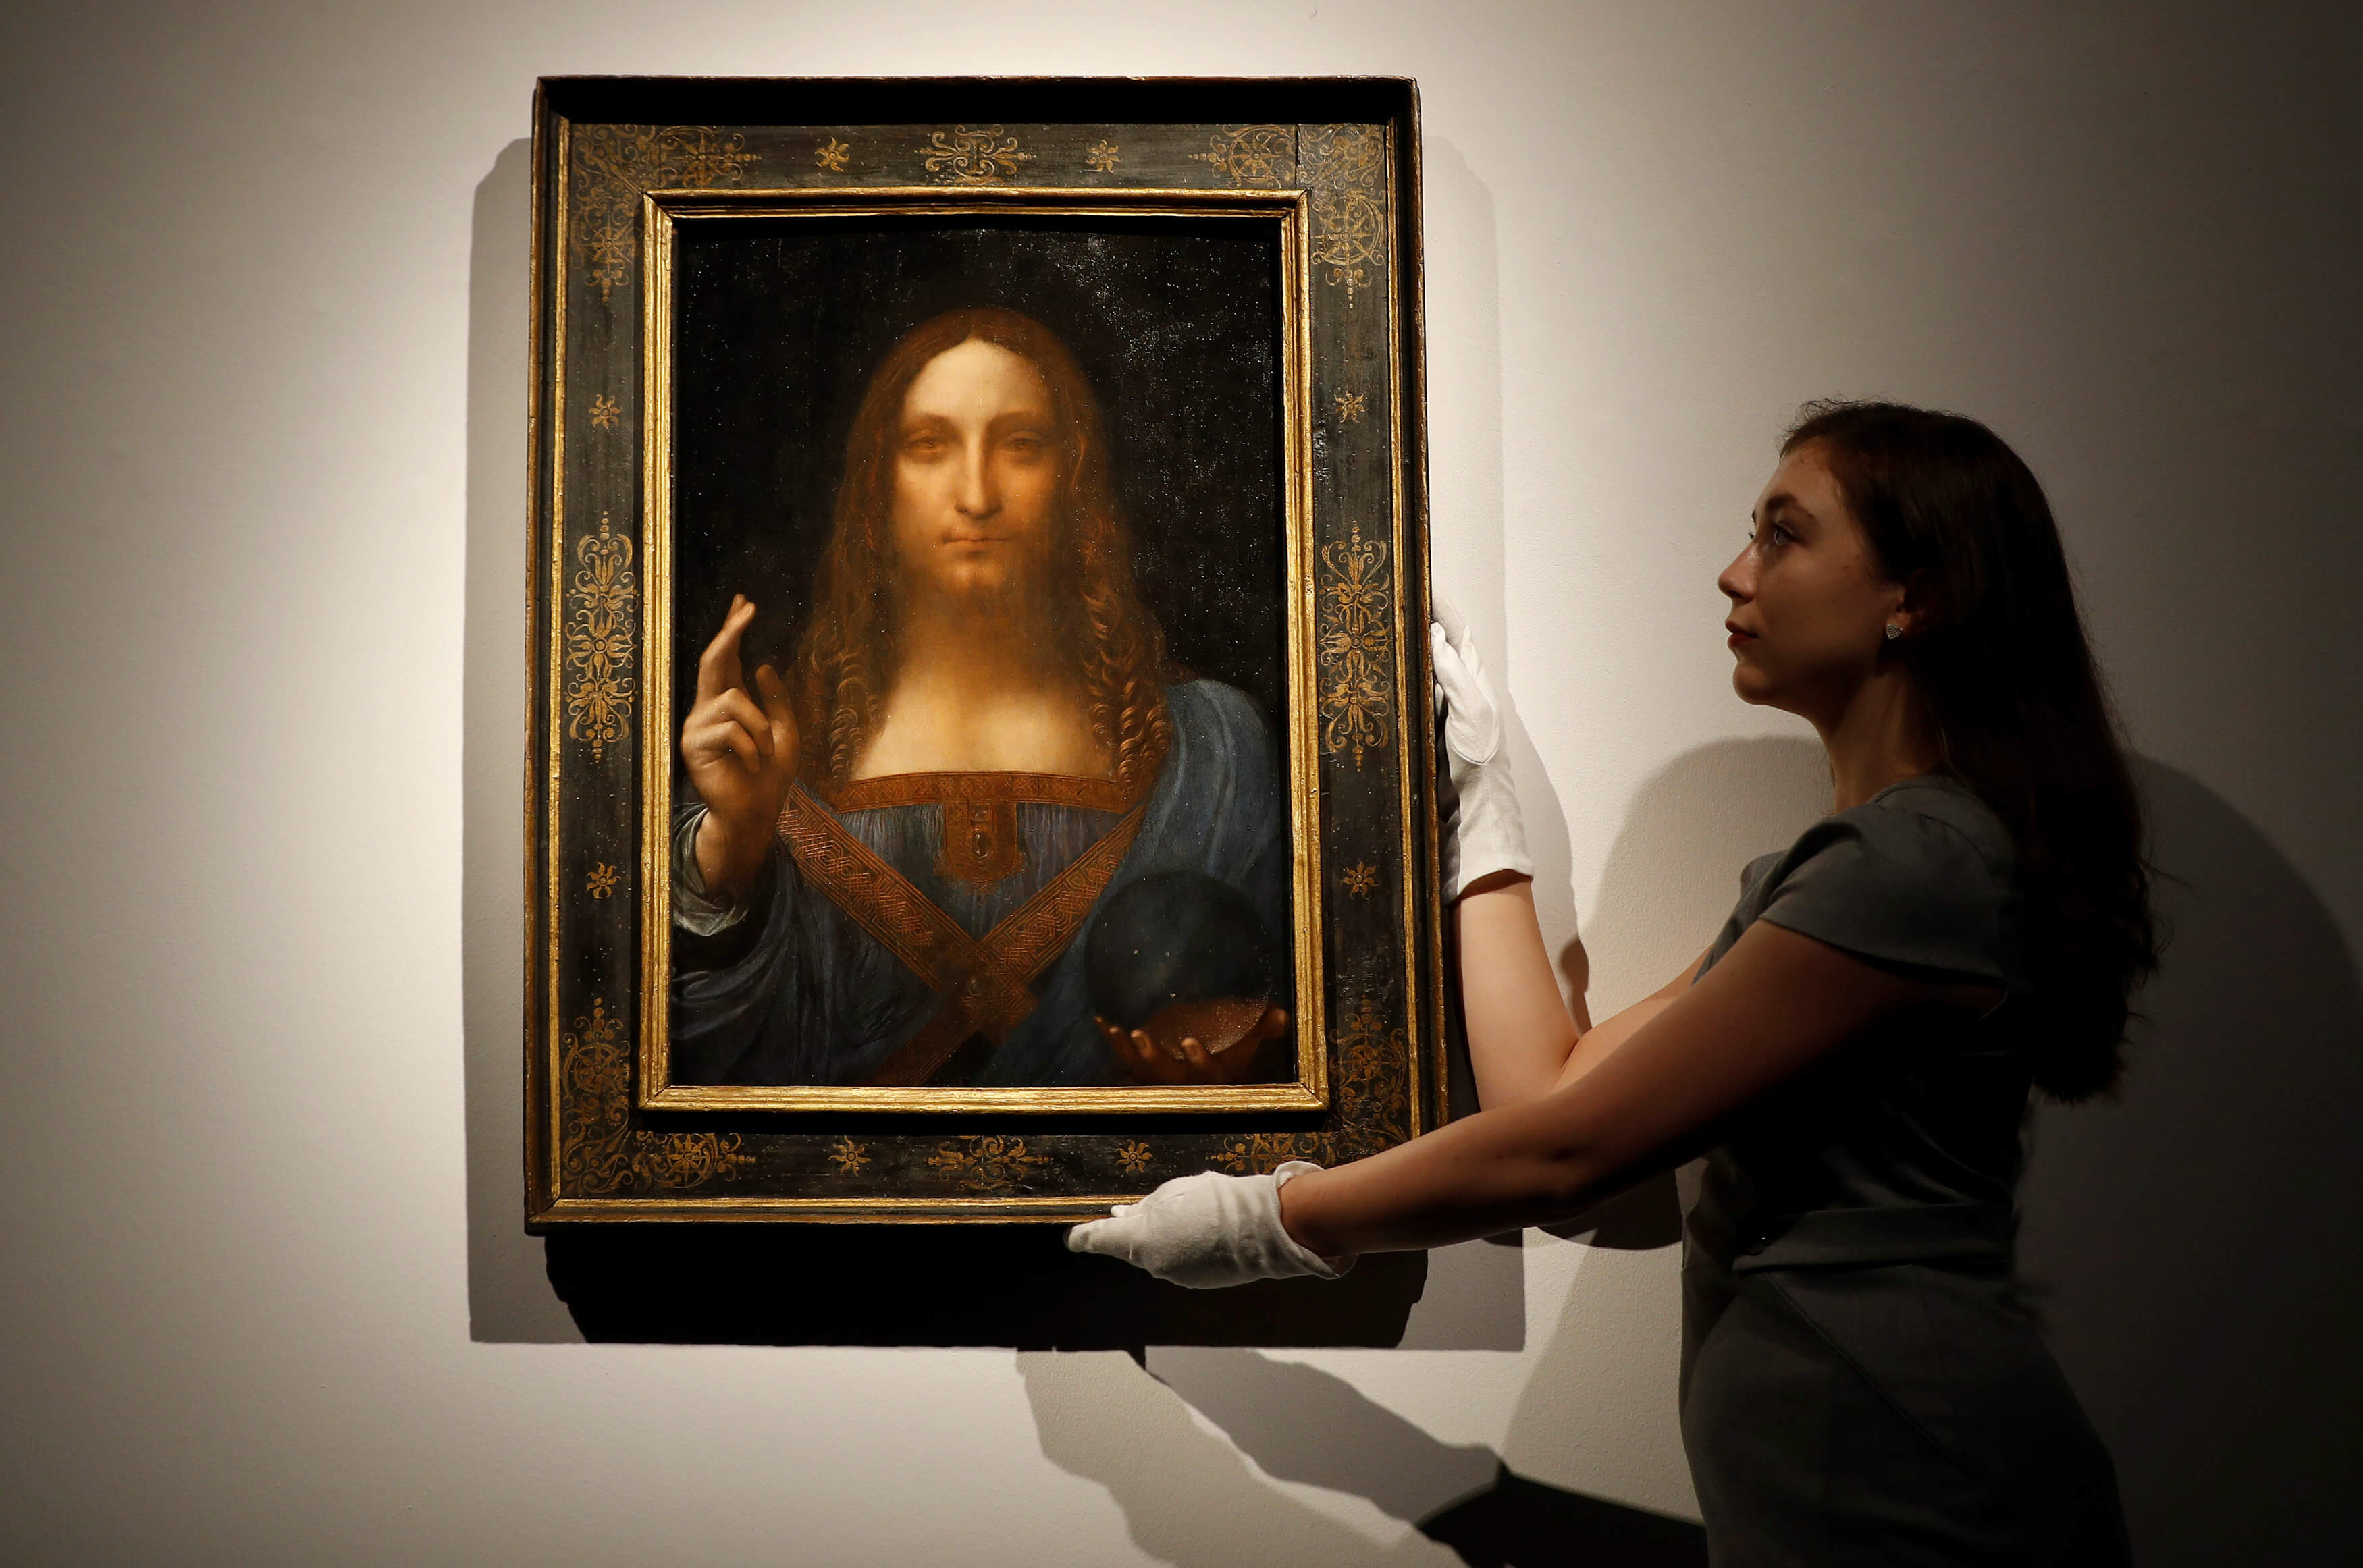 Subastan cuadro Leonardo Da Vinci Salvator Mundi 450 mdd